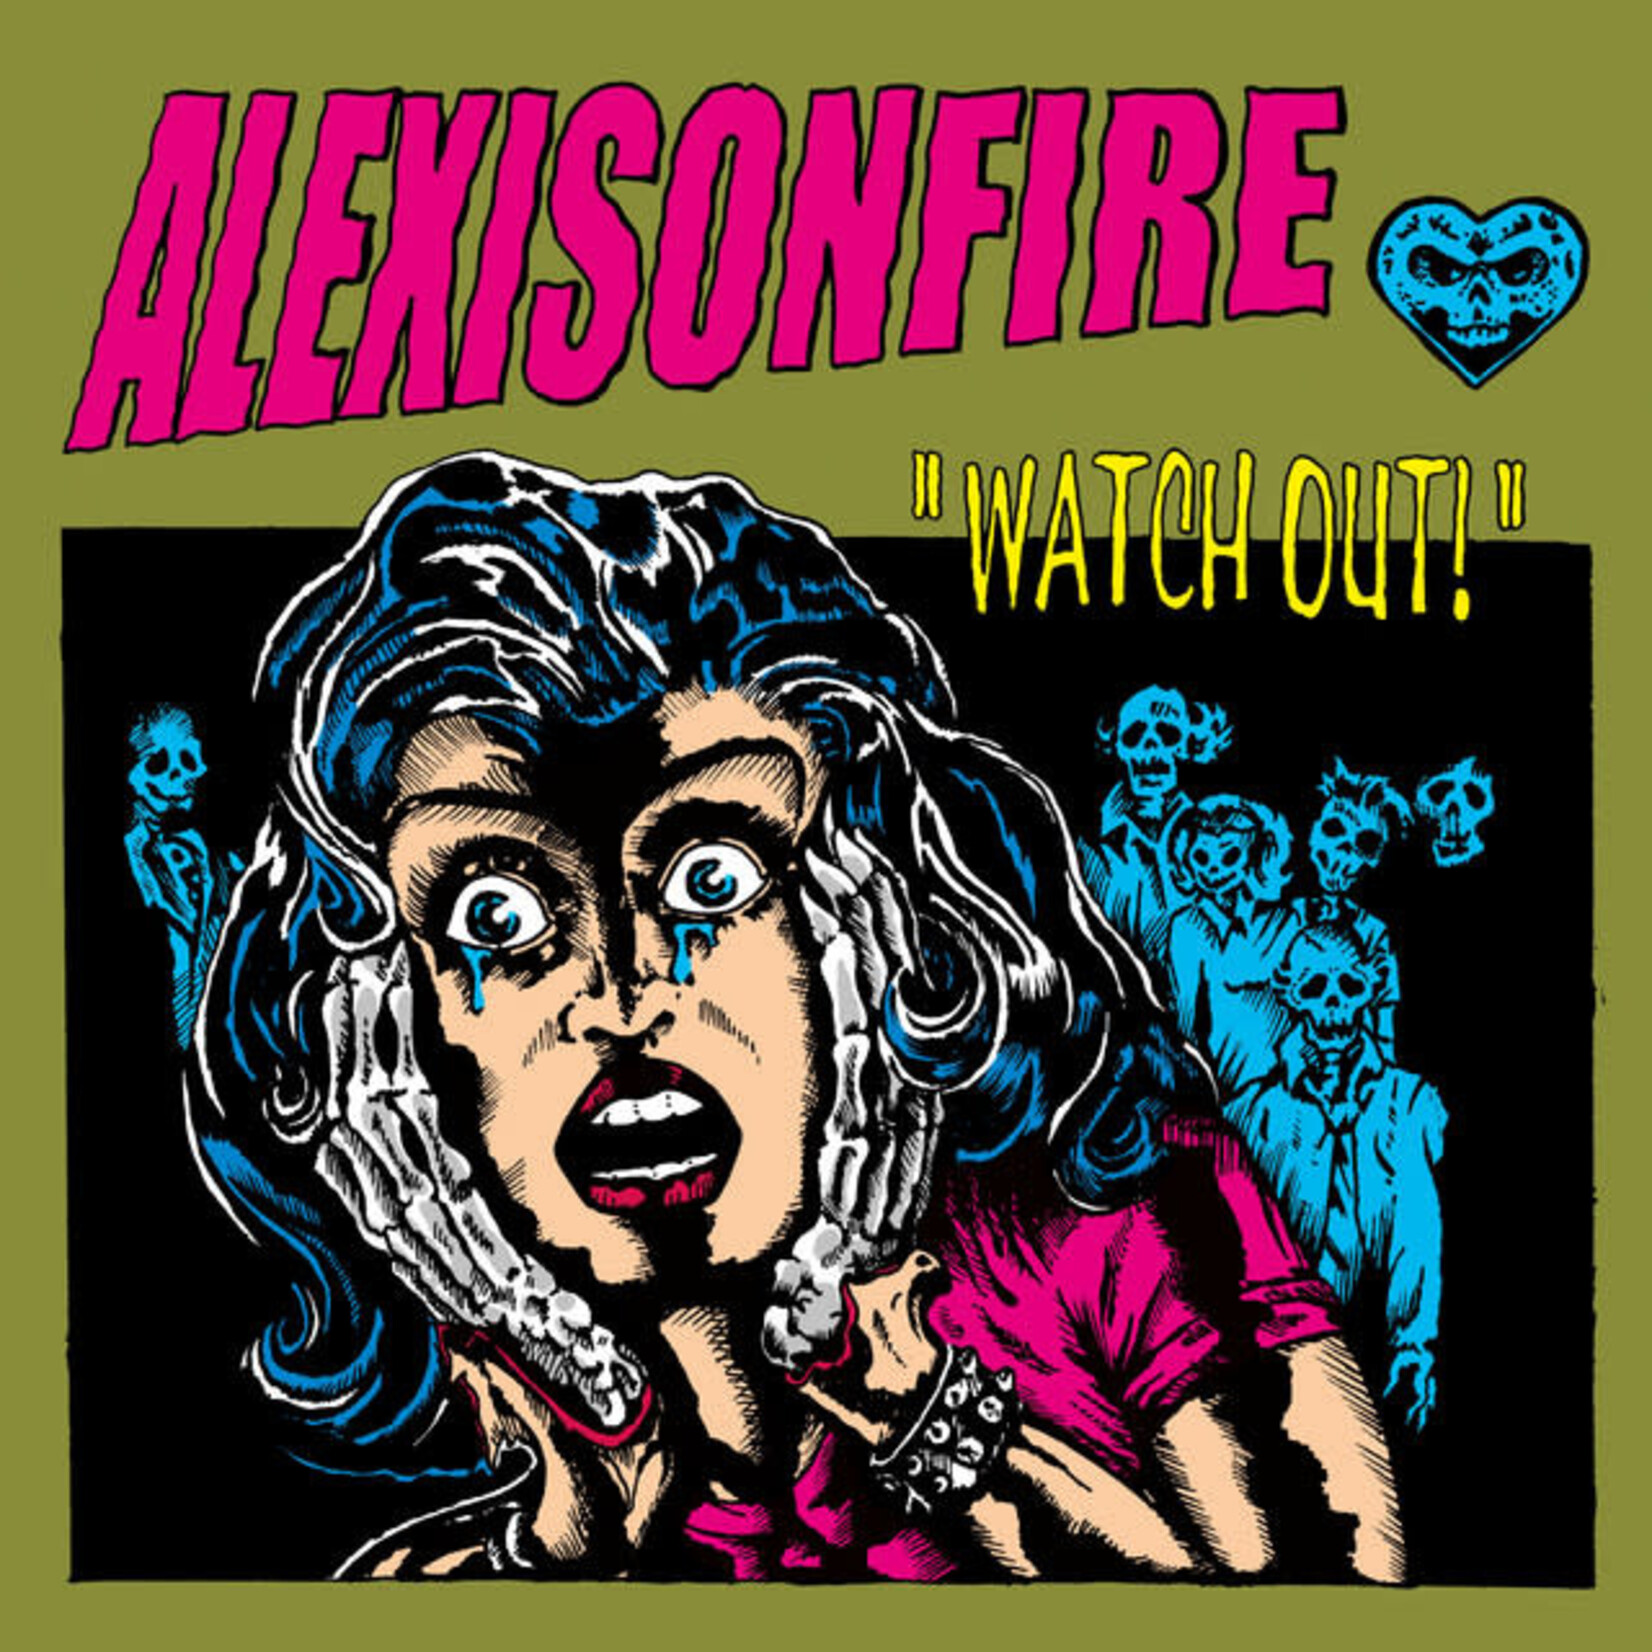 Alexisonfire - Watch Out! [CD]